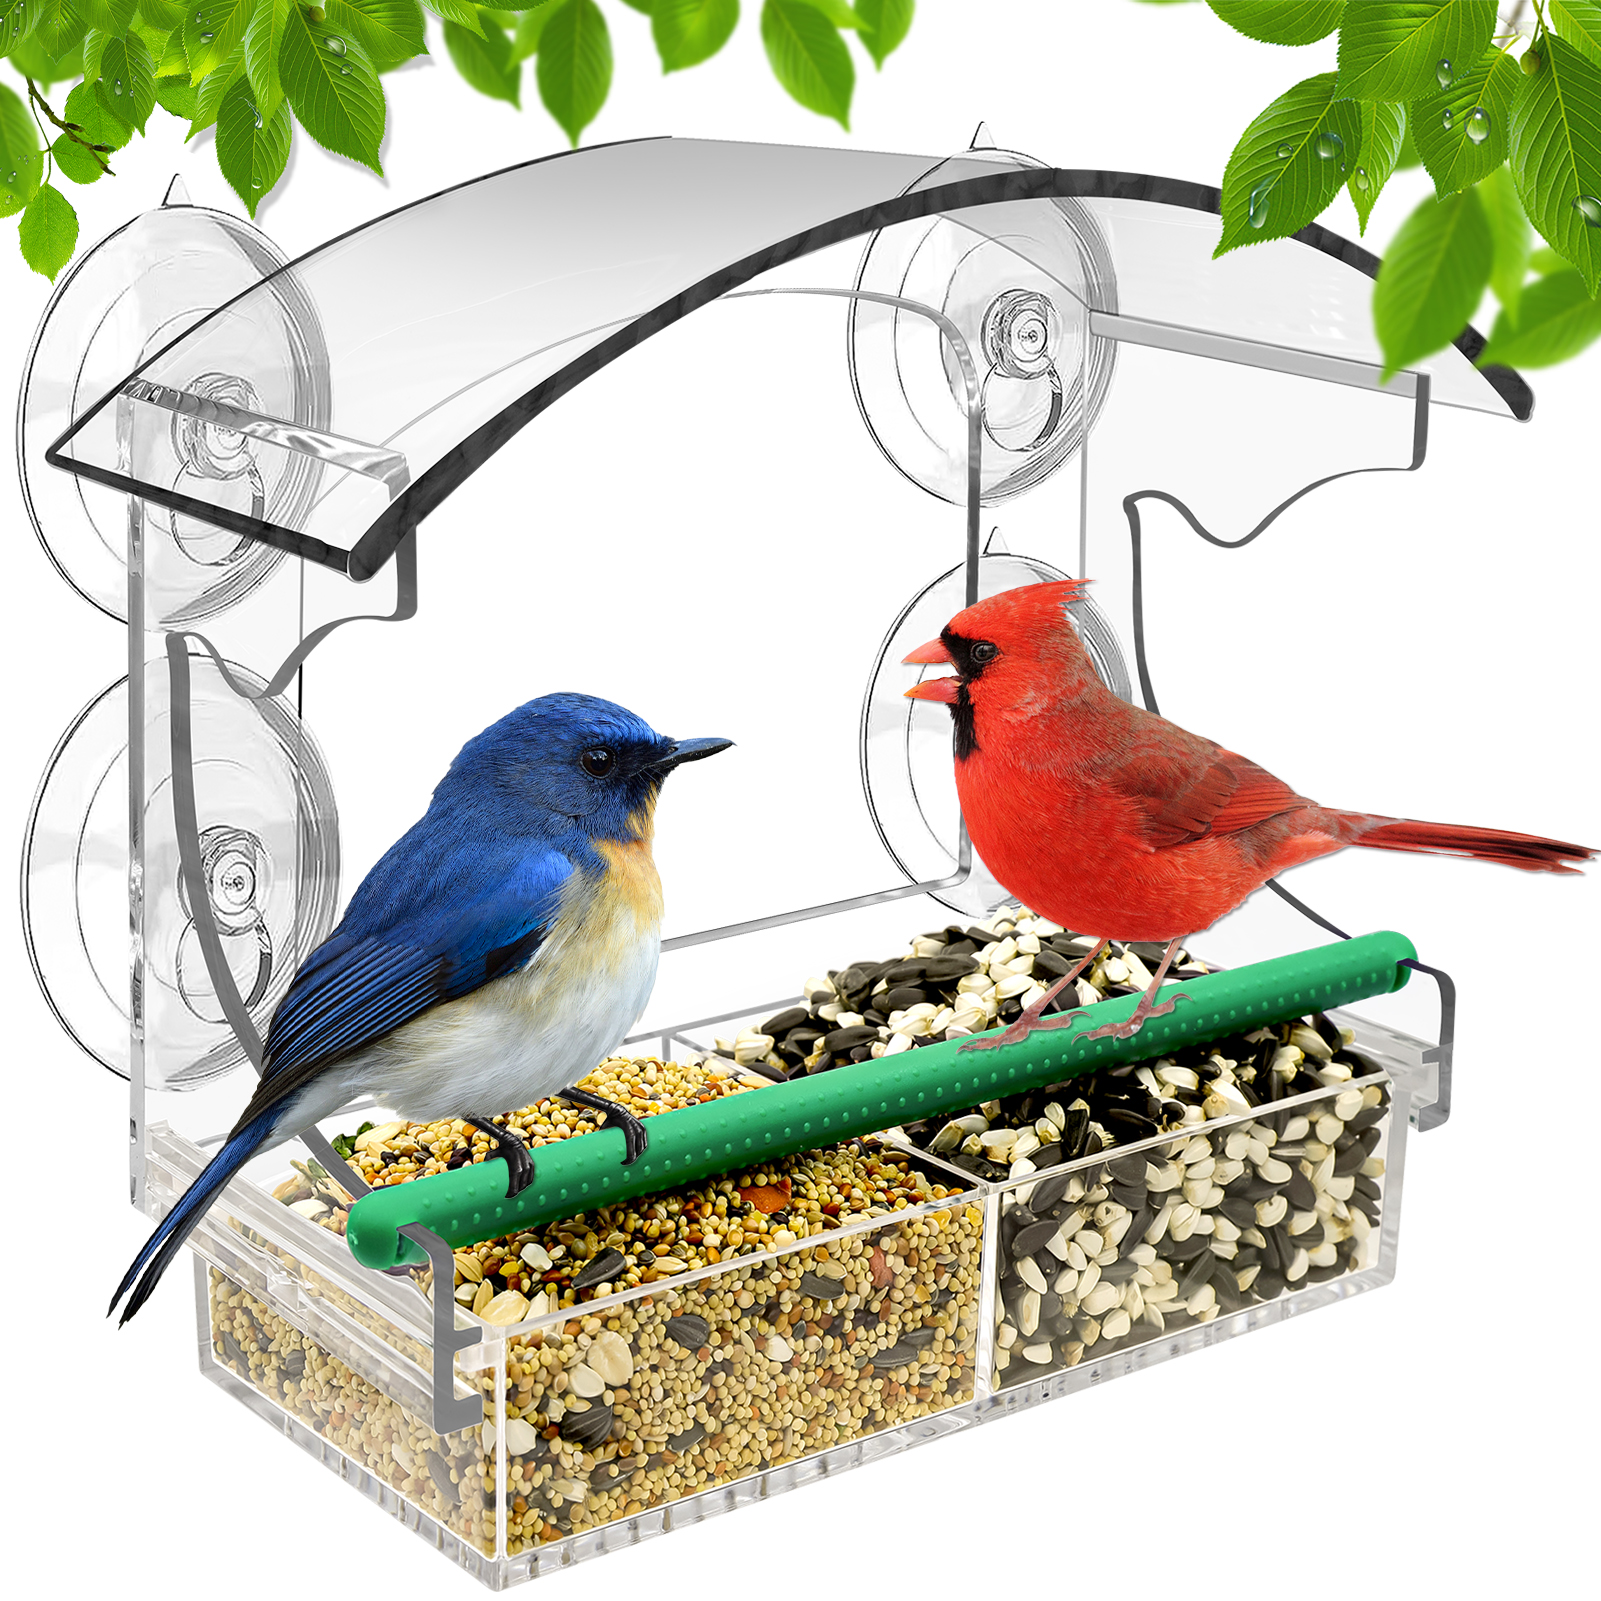 LANNEY Window Bird Feeder, Strong Suction Cups Window Bird Feeders for Viewing Wild Bird Outside, Weatherproof Bird House